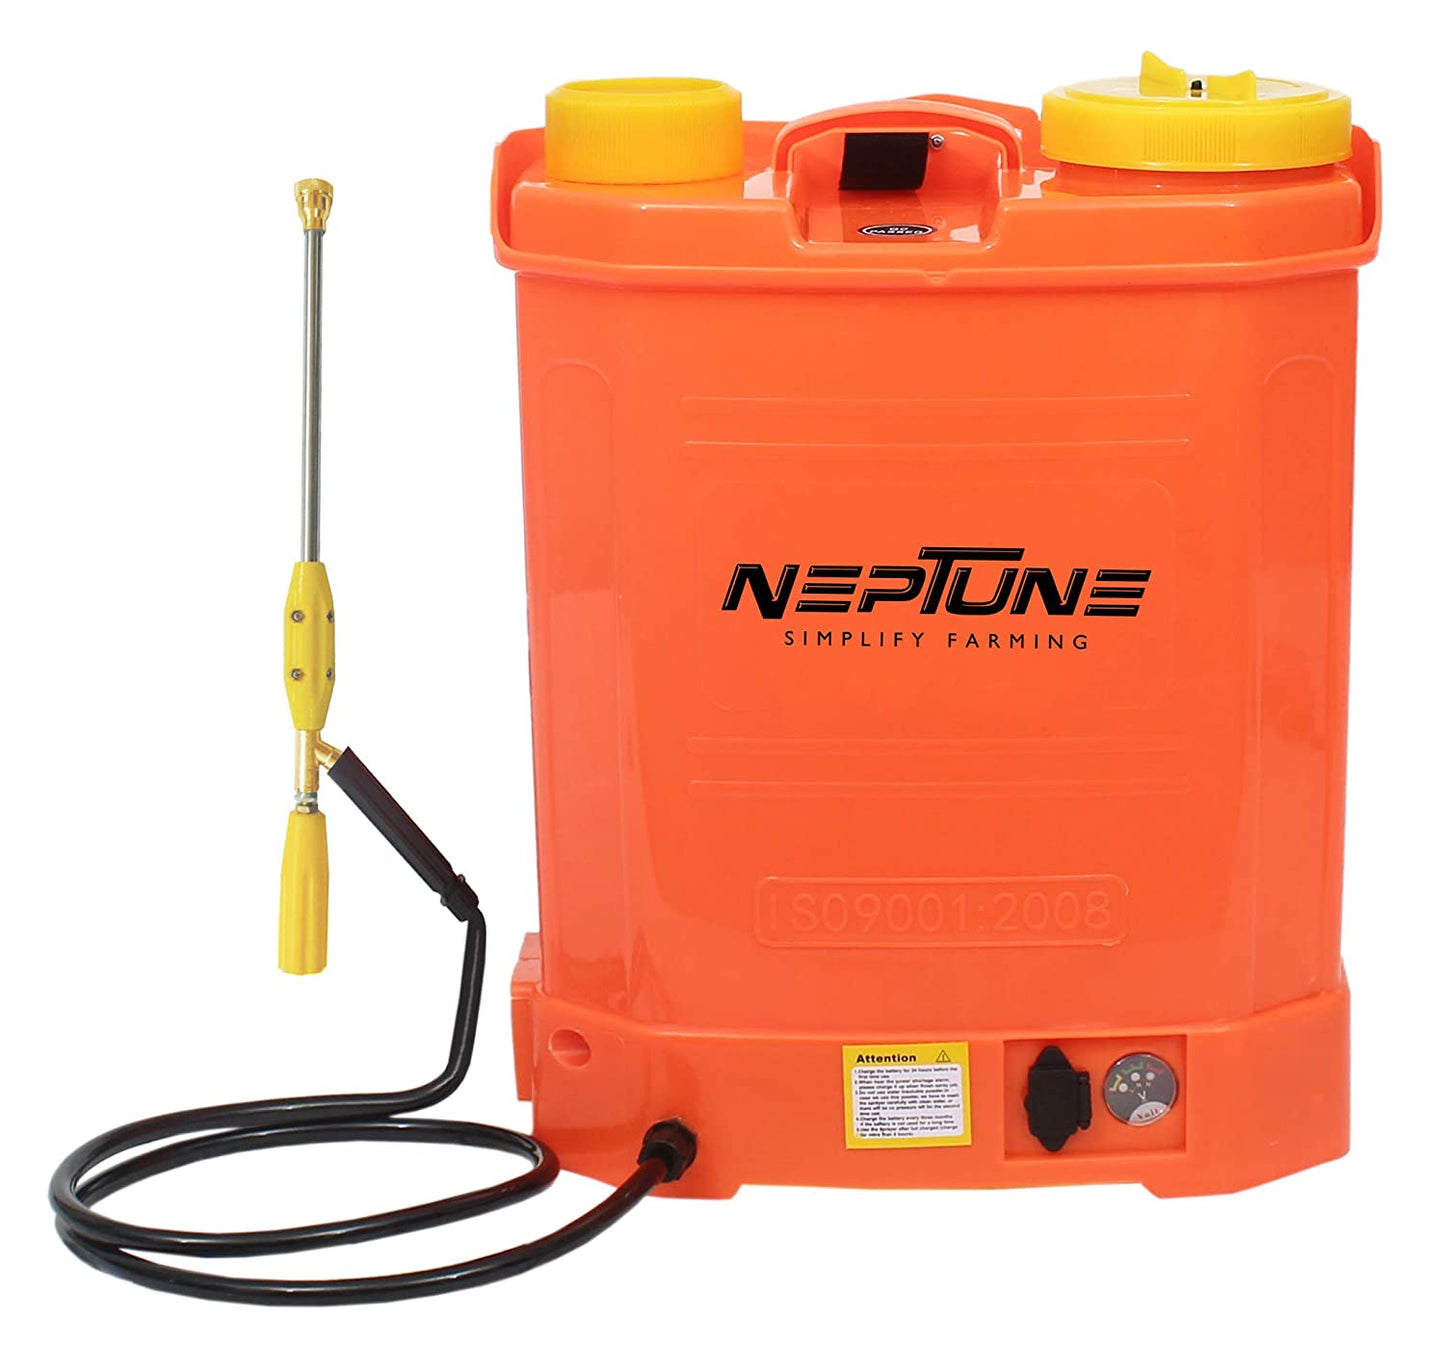 Neptune Simplify Farming Knapsack Double Pump Garden Sprayer